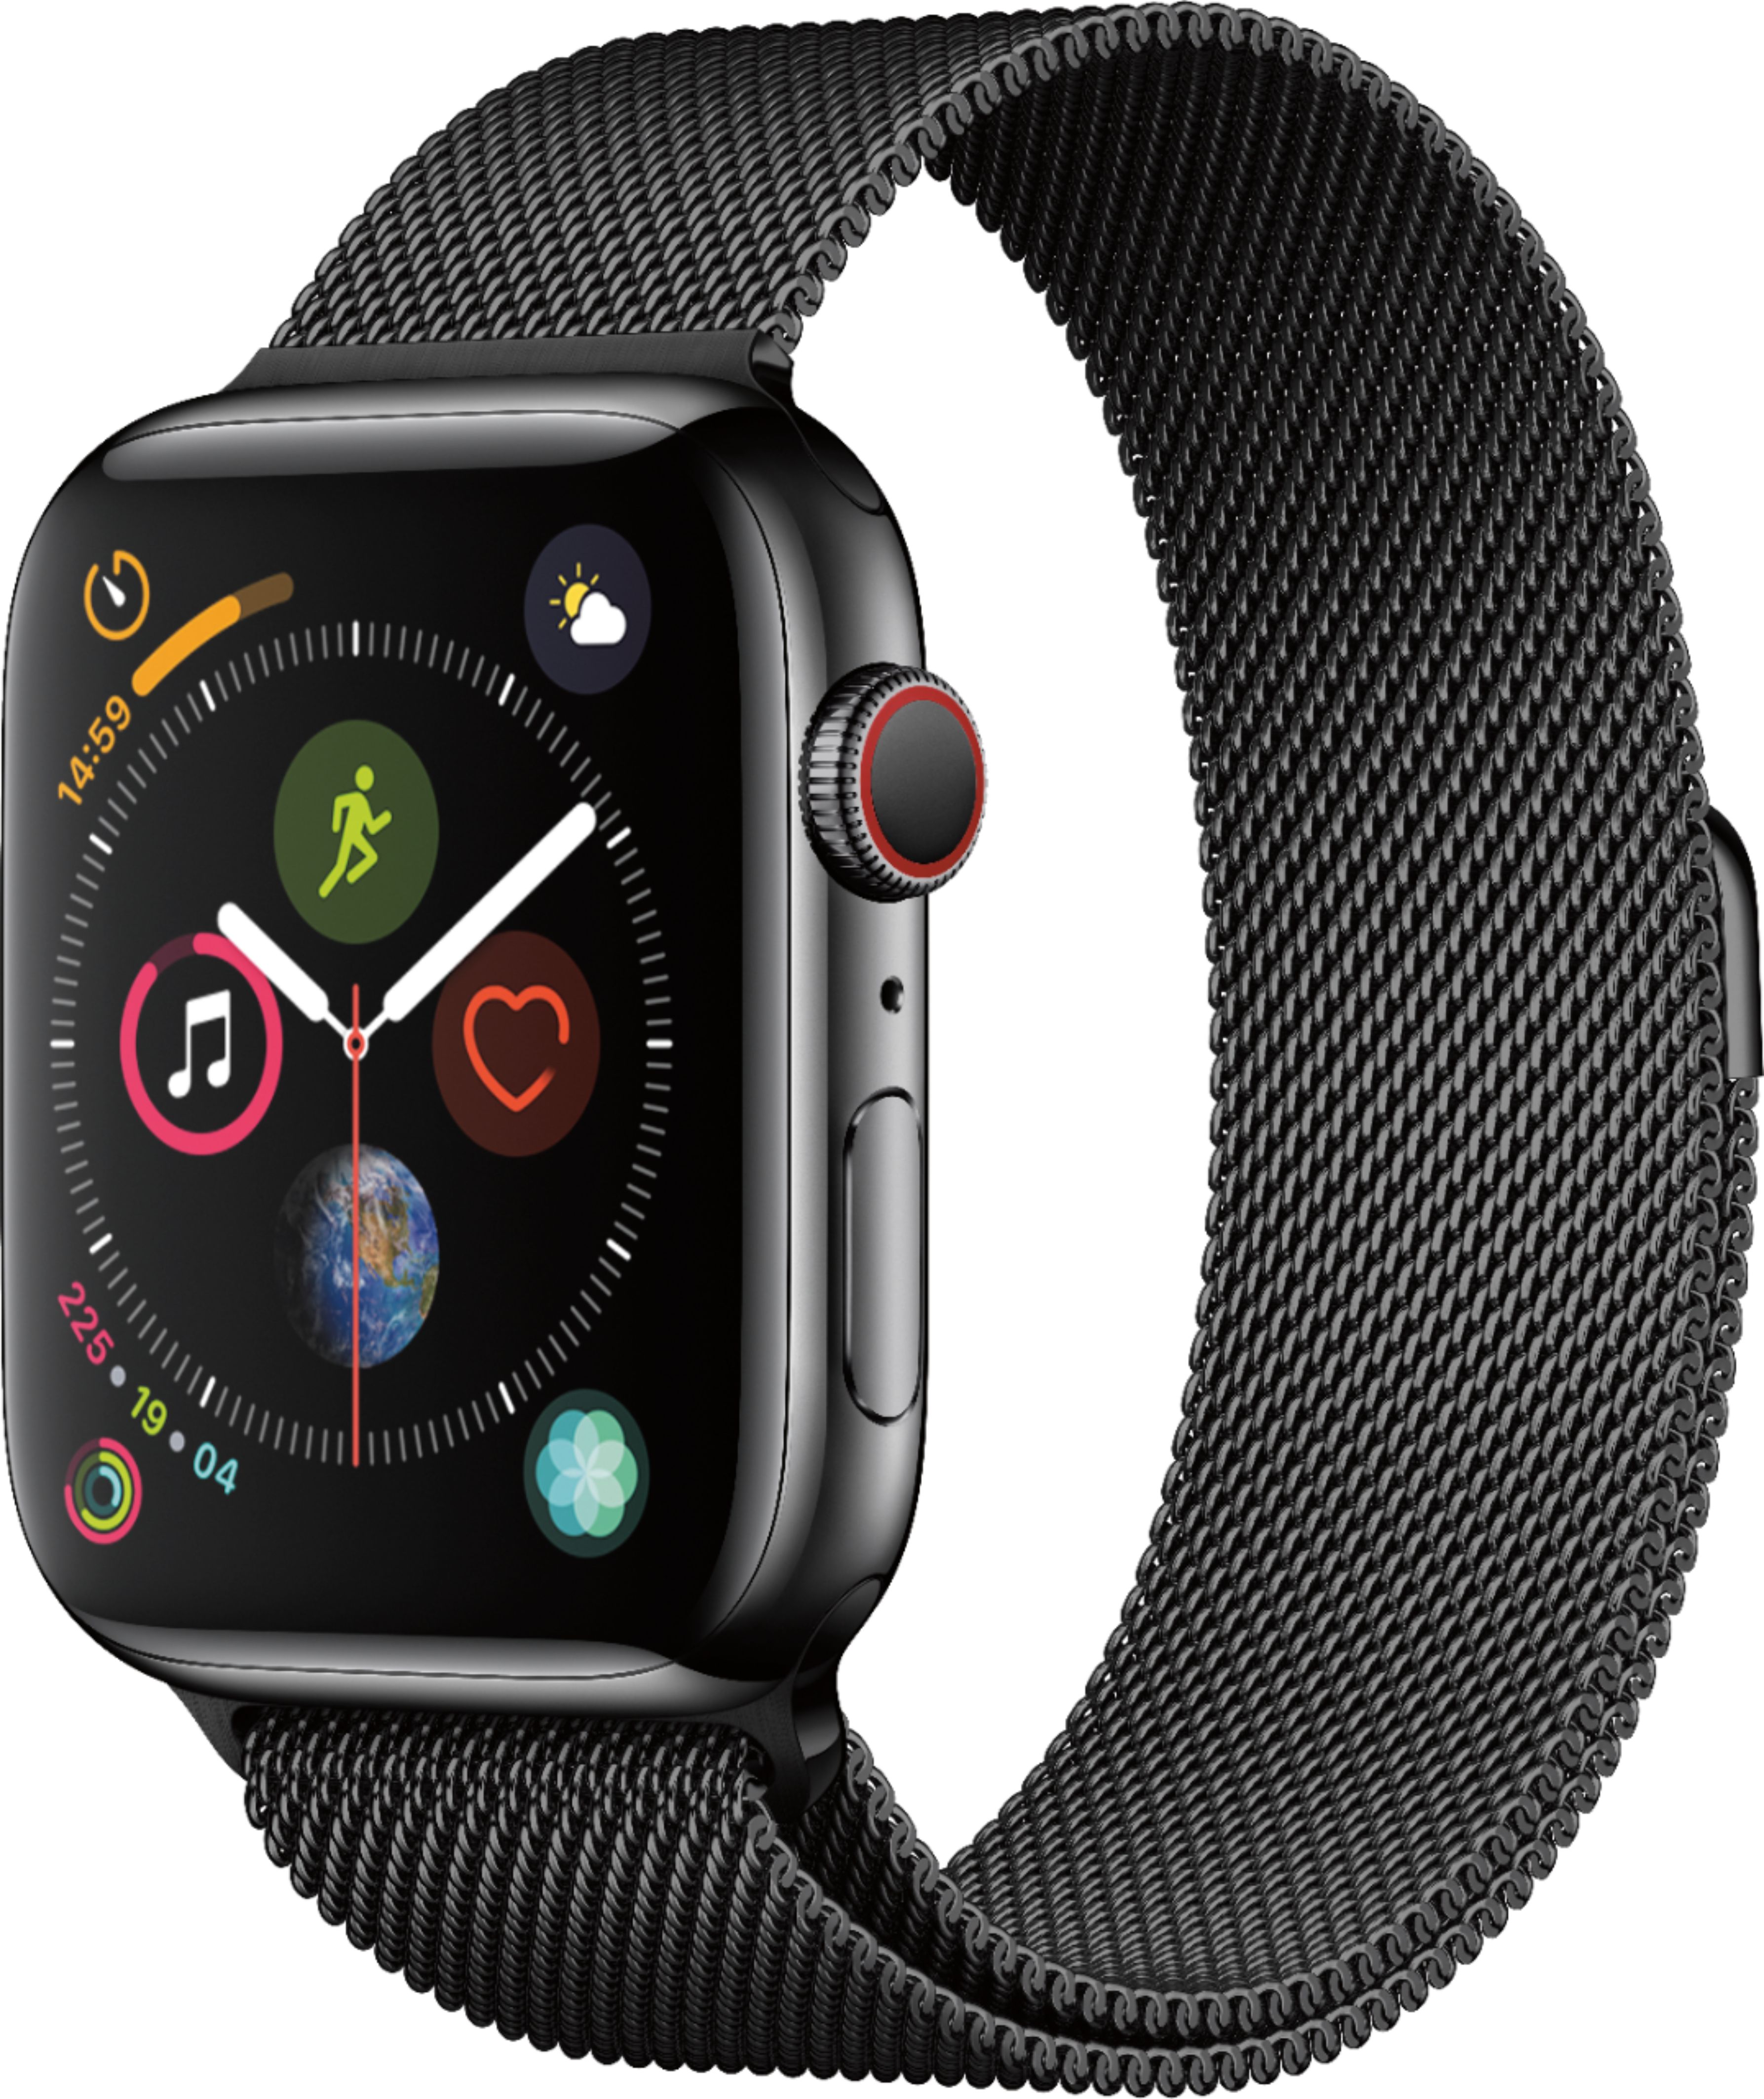 Geek Squad Certified Refurbished Apple Watch Series 4 (GPS + Cellular) 44mm Stainless Steel Case with Milanese Loop - Space Black Stainless Steel